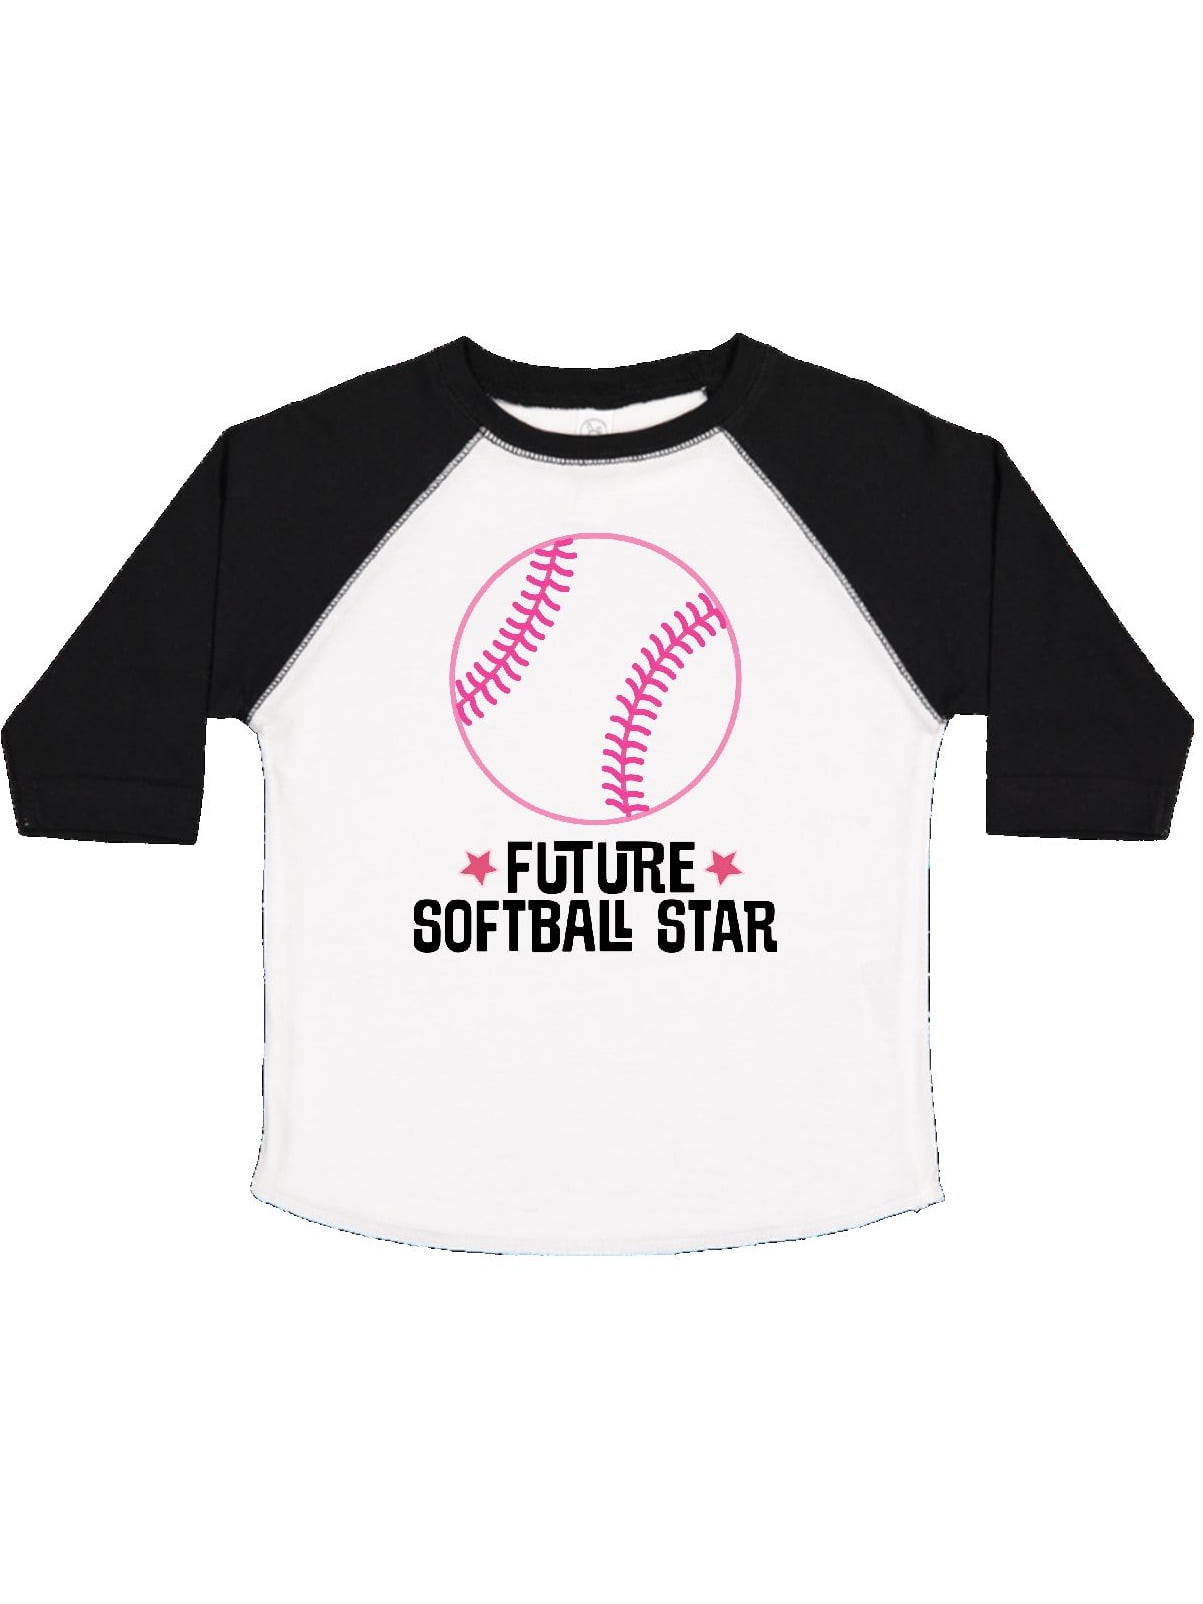 Softball Shirt  Softball Sister Shirt  Softball Brother Shirt  Baby Softball Outfit  I'm Her Biggest Fan Softball Shirt Girls Boys